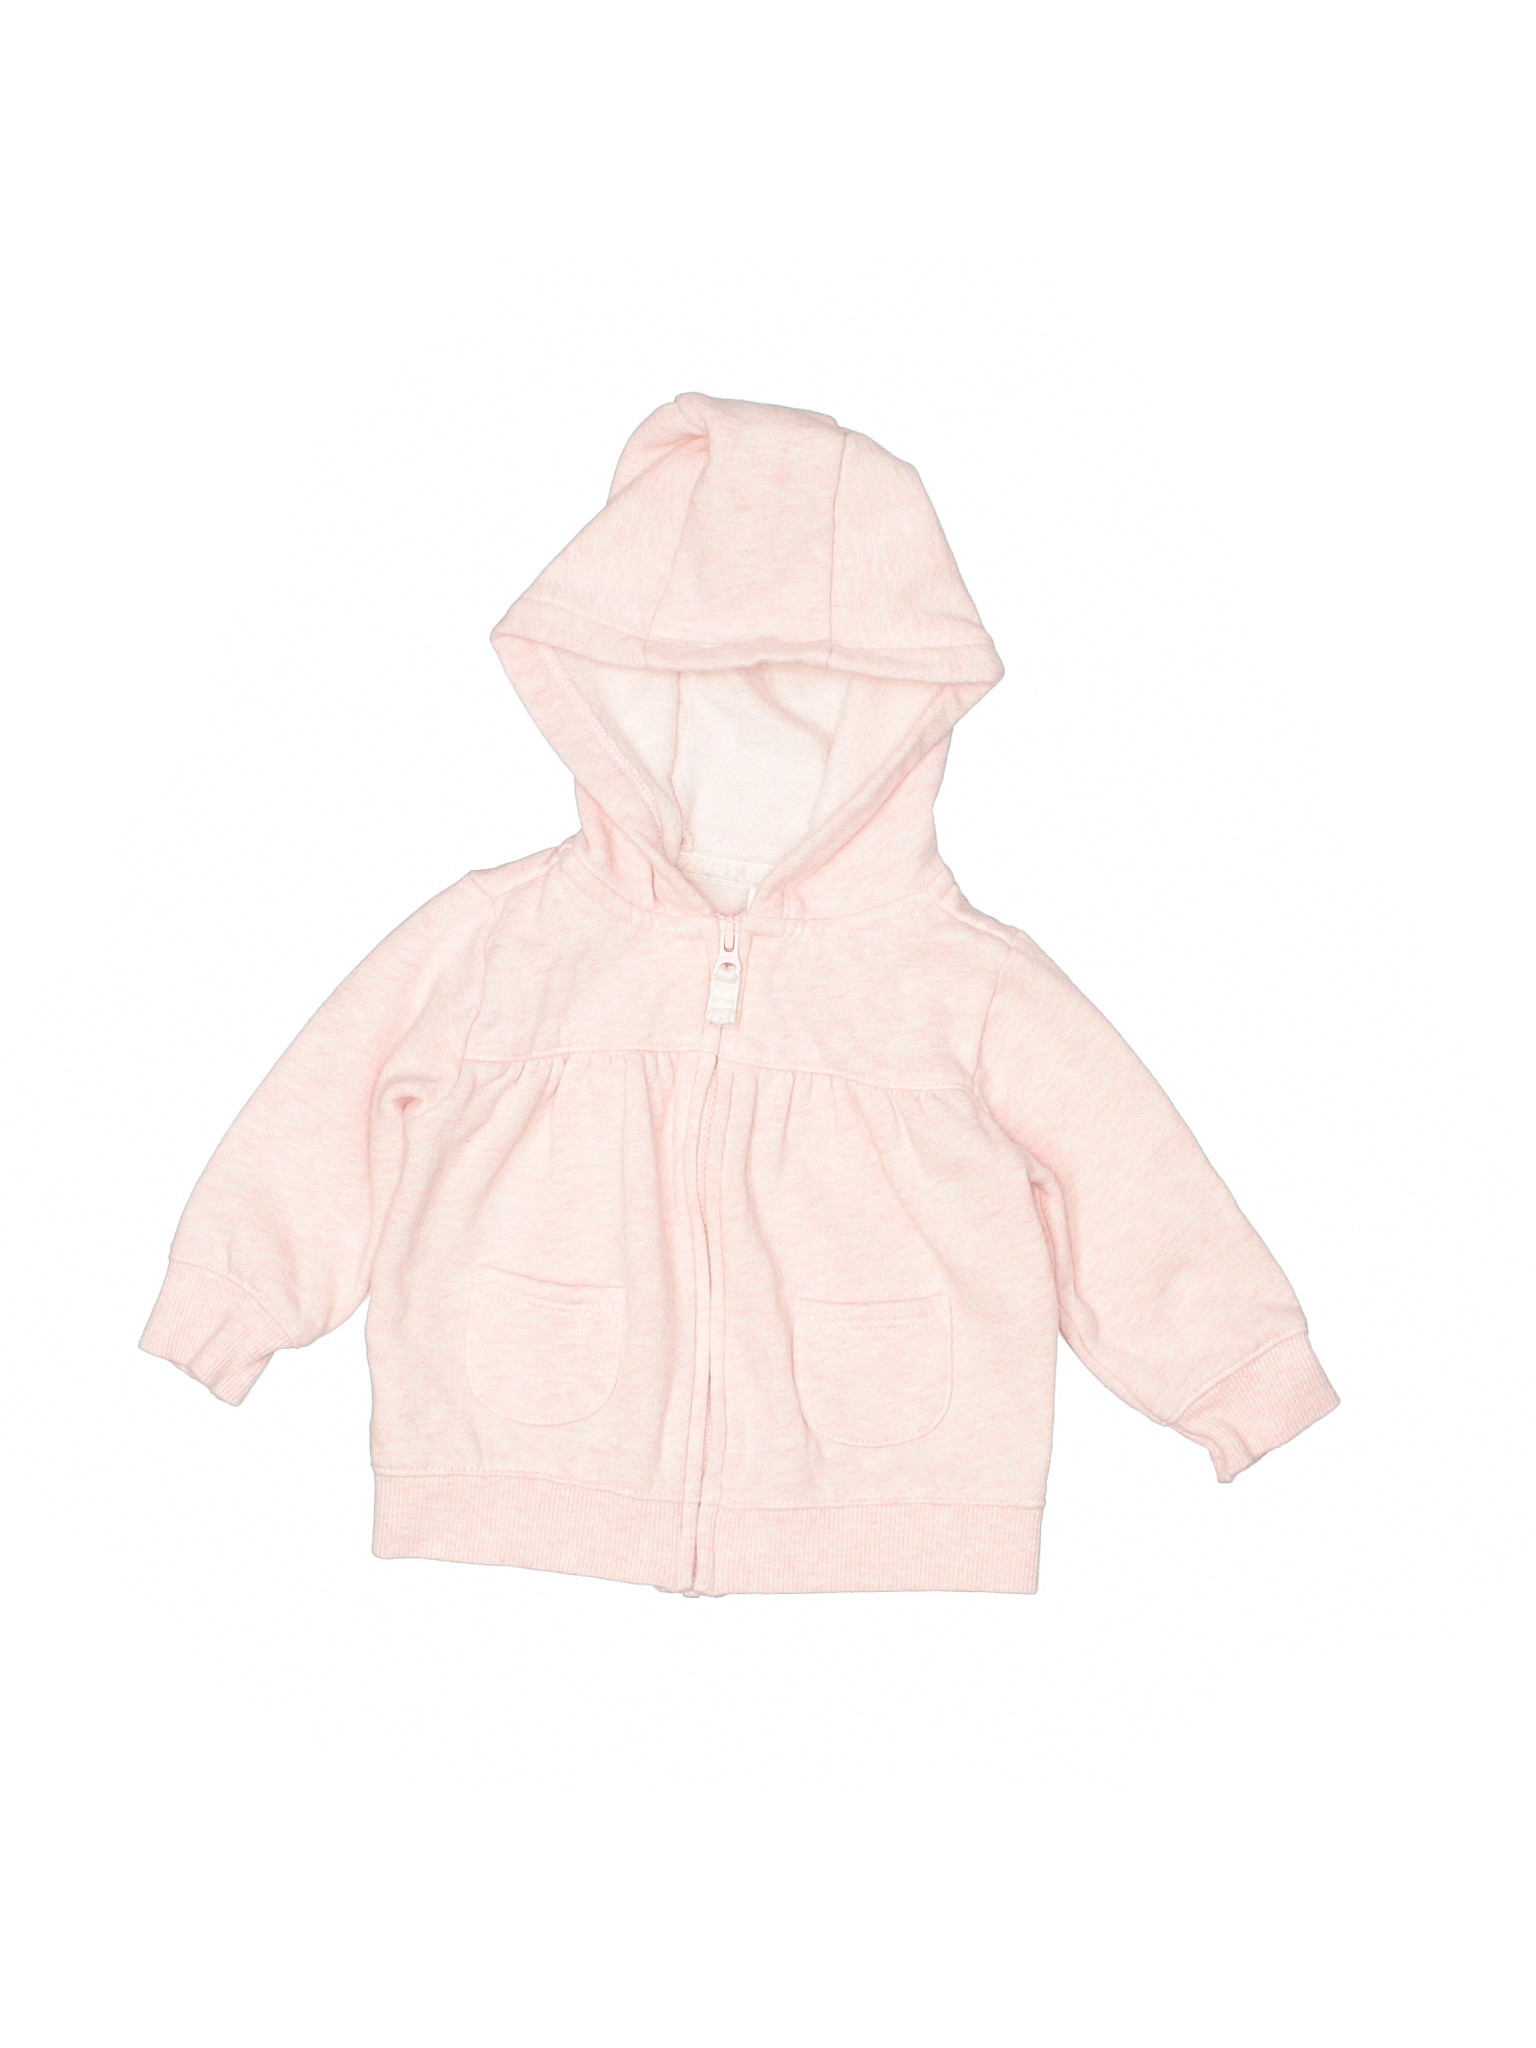 Carter's Girls Pink Zip Up Hoodie 6 Months | eBay